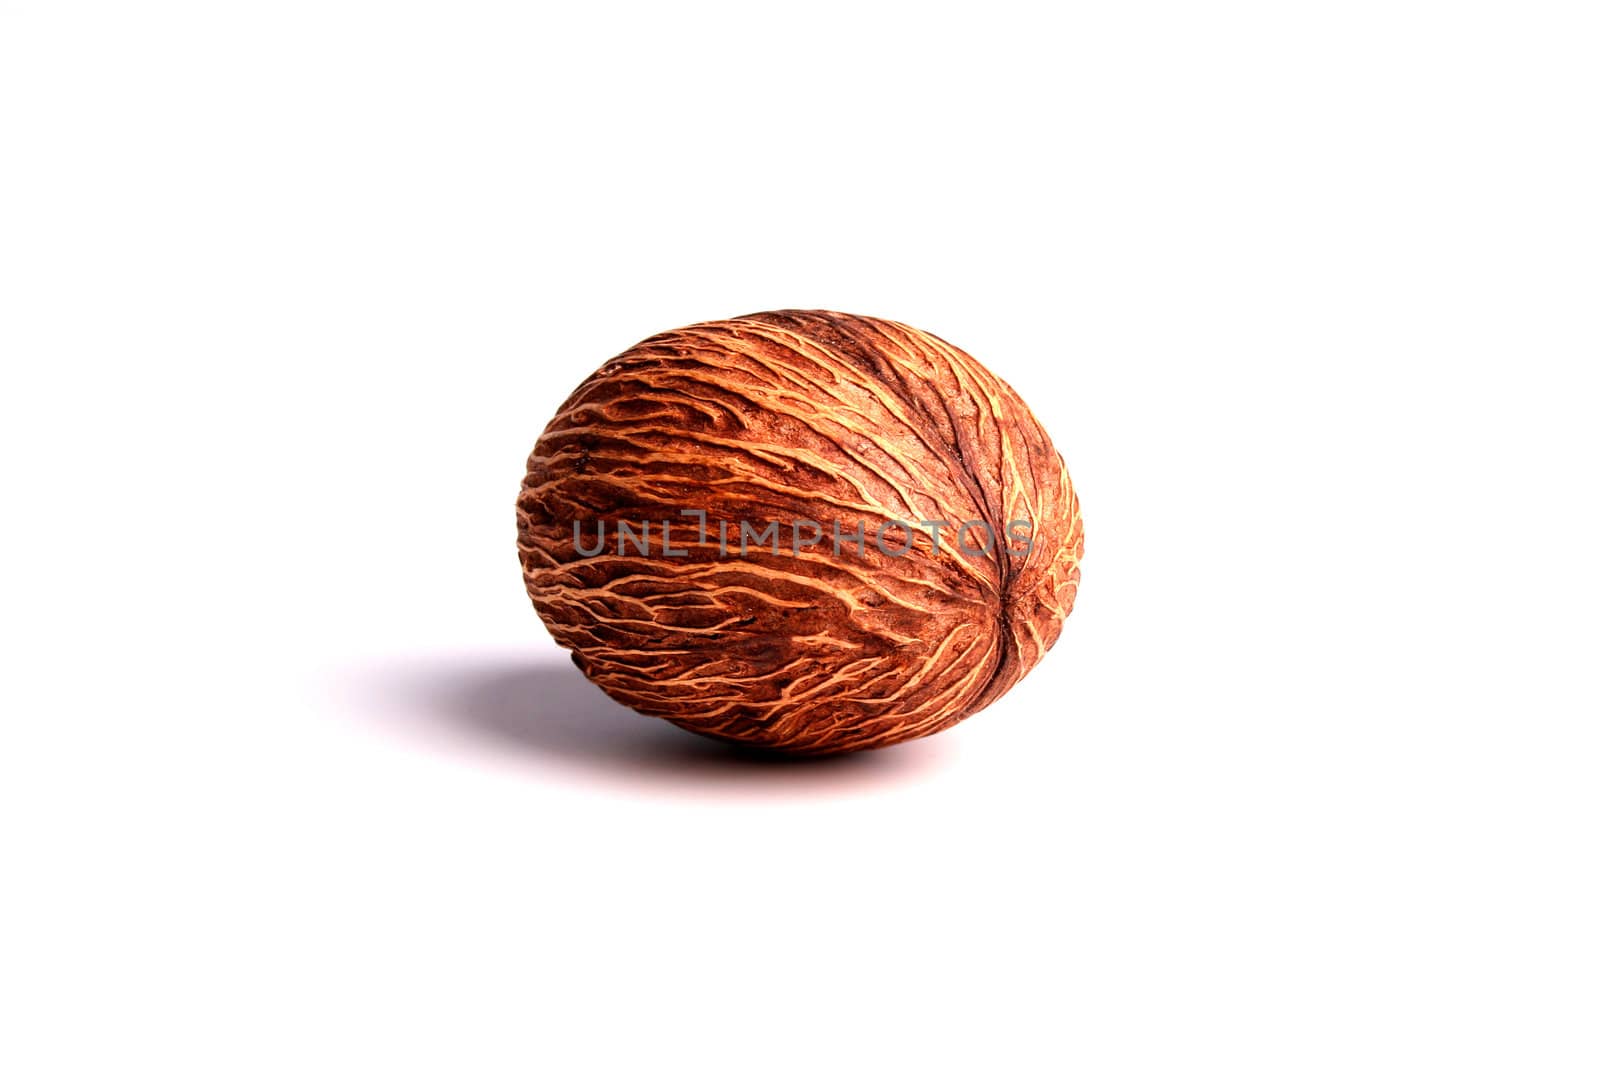 Decorative aromatic nut by VIPDesignUSA